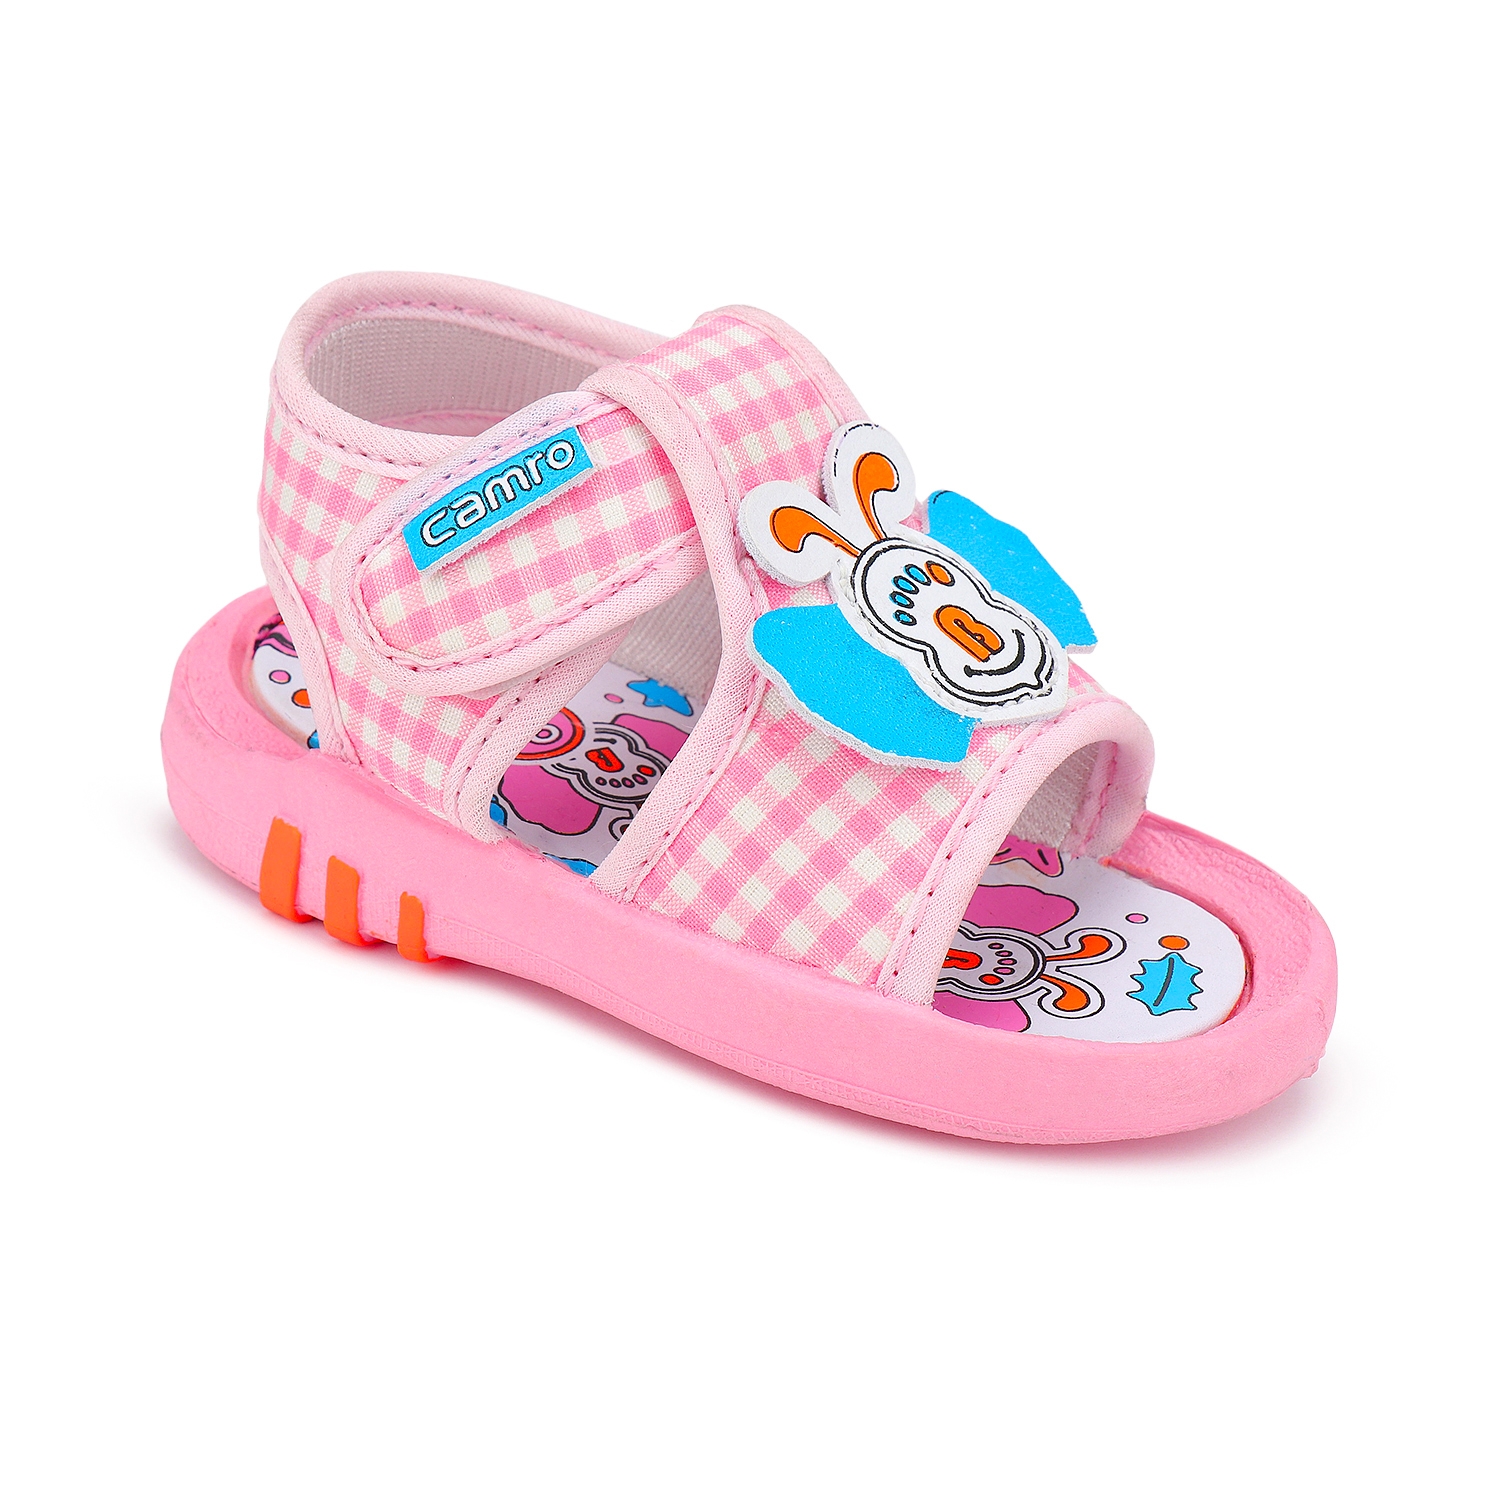 Camro Jingle 6 Pink Kiddy Sandals